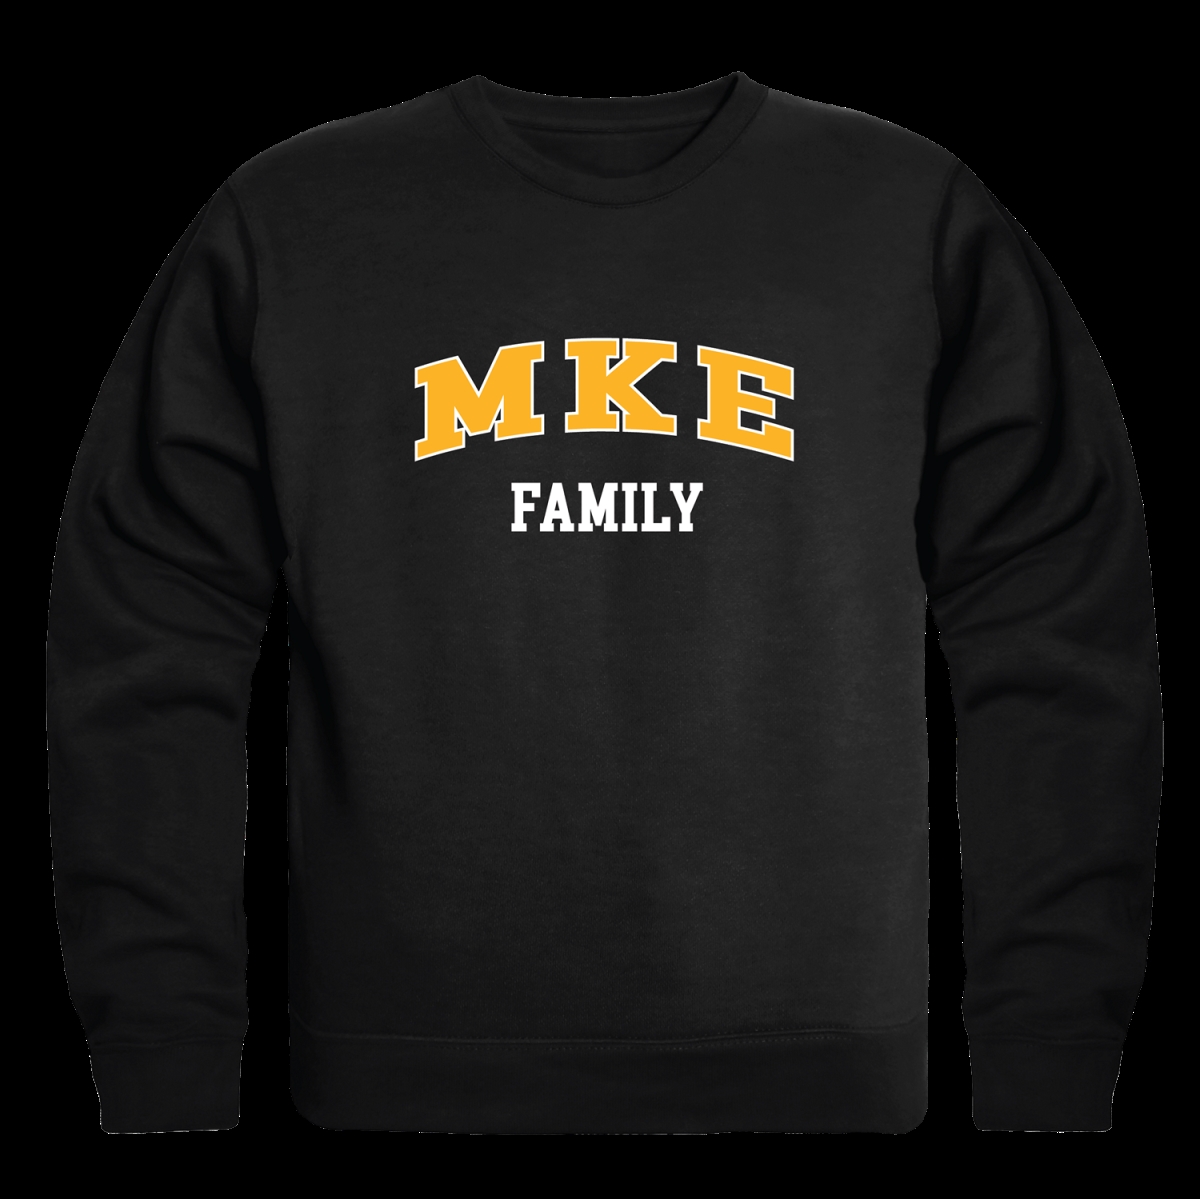 W Republic 572-199-BLK-02 University of Wisconsin-Milwaukee Panthers Family Crewneck Sweatshirt&#44; Black - Medium